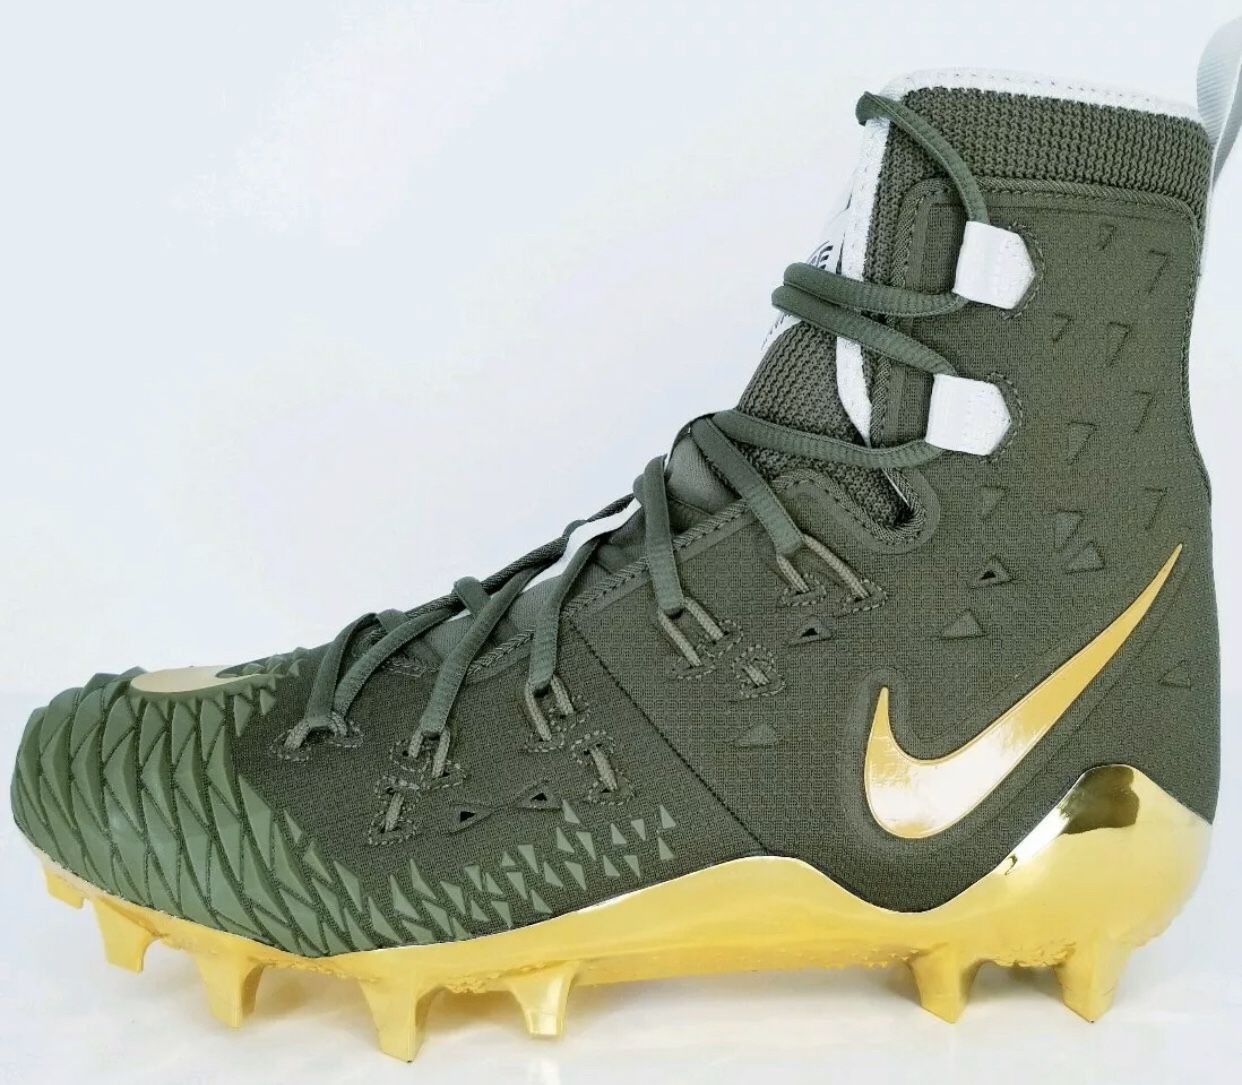 NEW! Nike Force Savage Elite TD Football Cleat Sz 15 & 16 Olive Green Gold AH6424-271